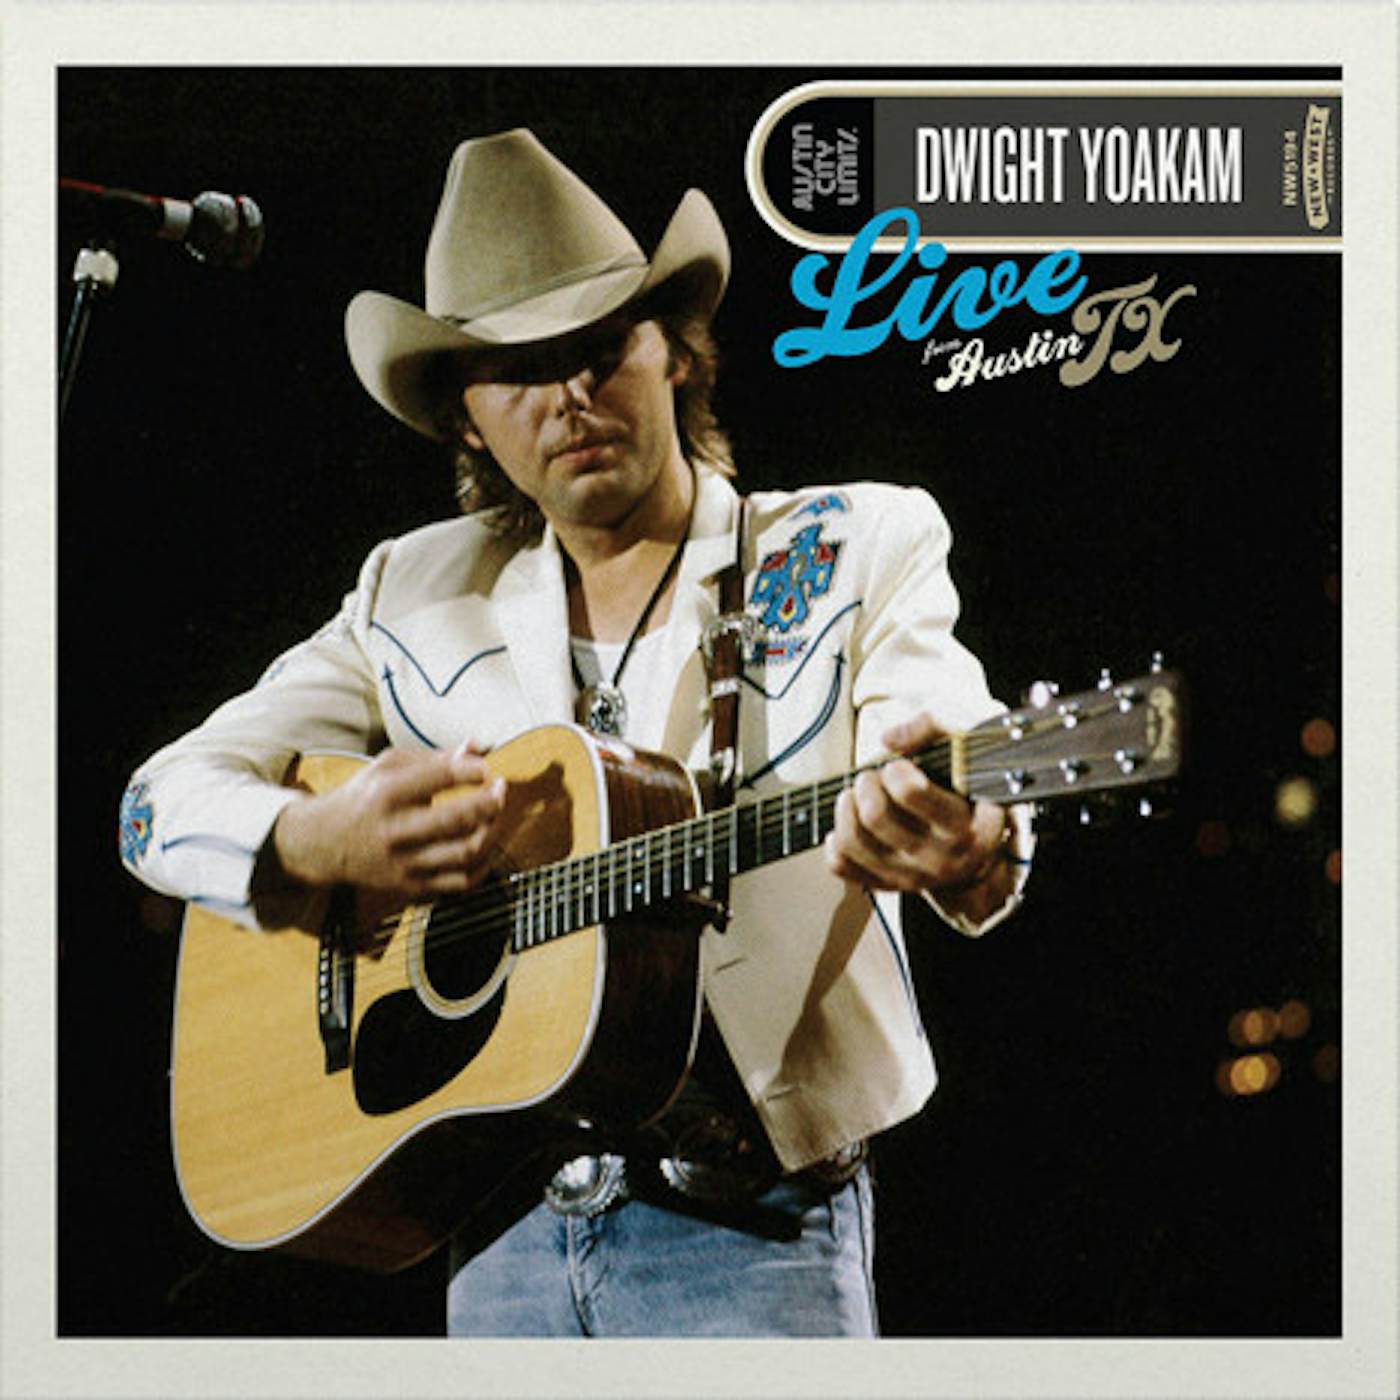 Dwight Yoakam Live From Austin TX Vinyl Record